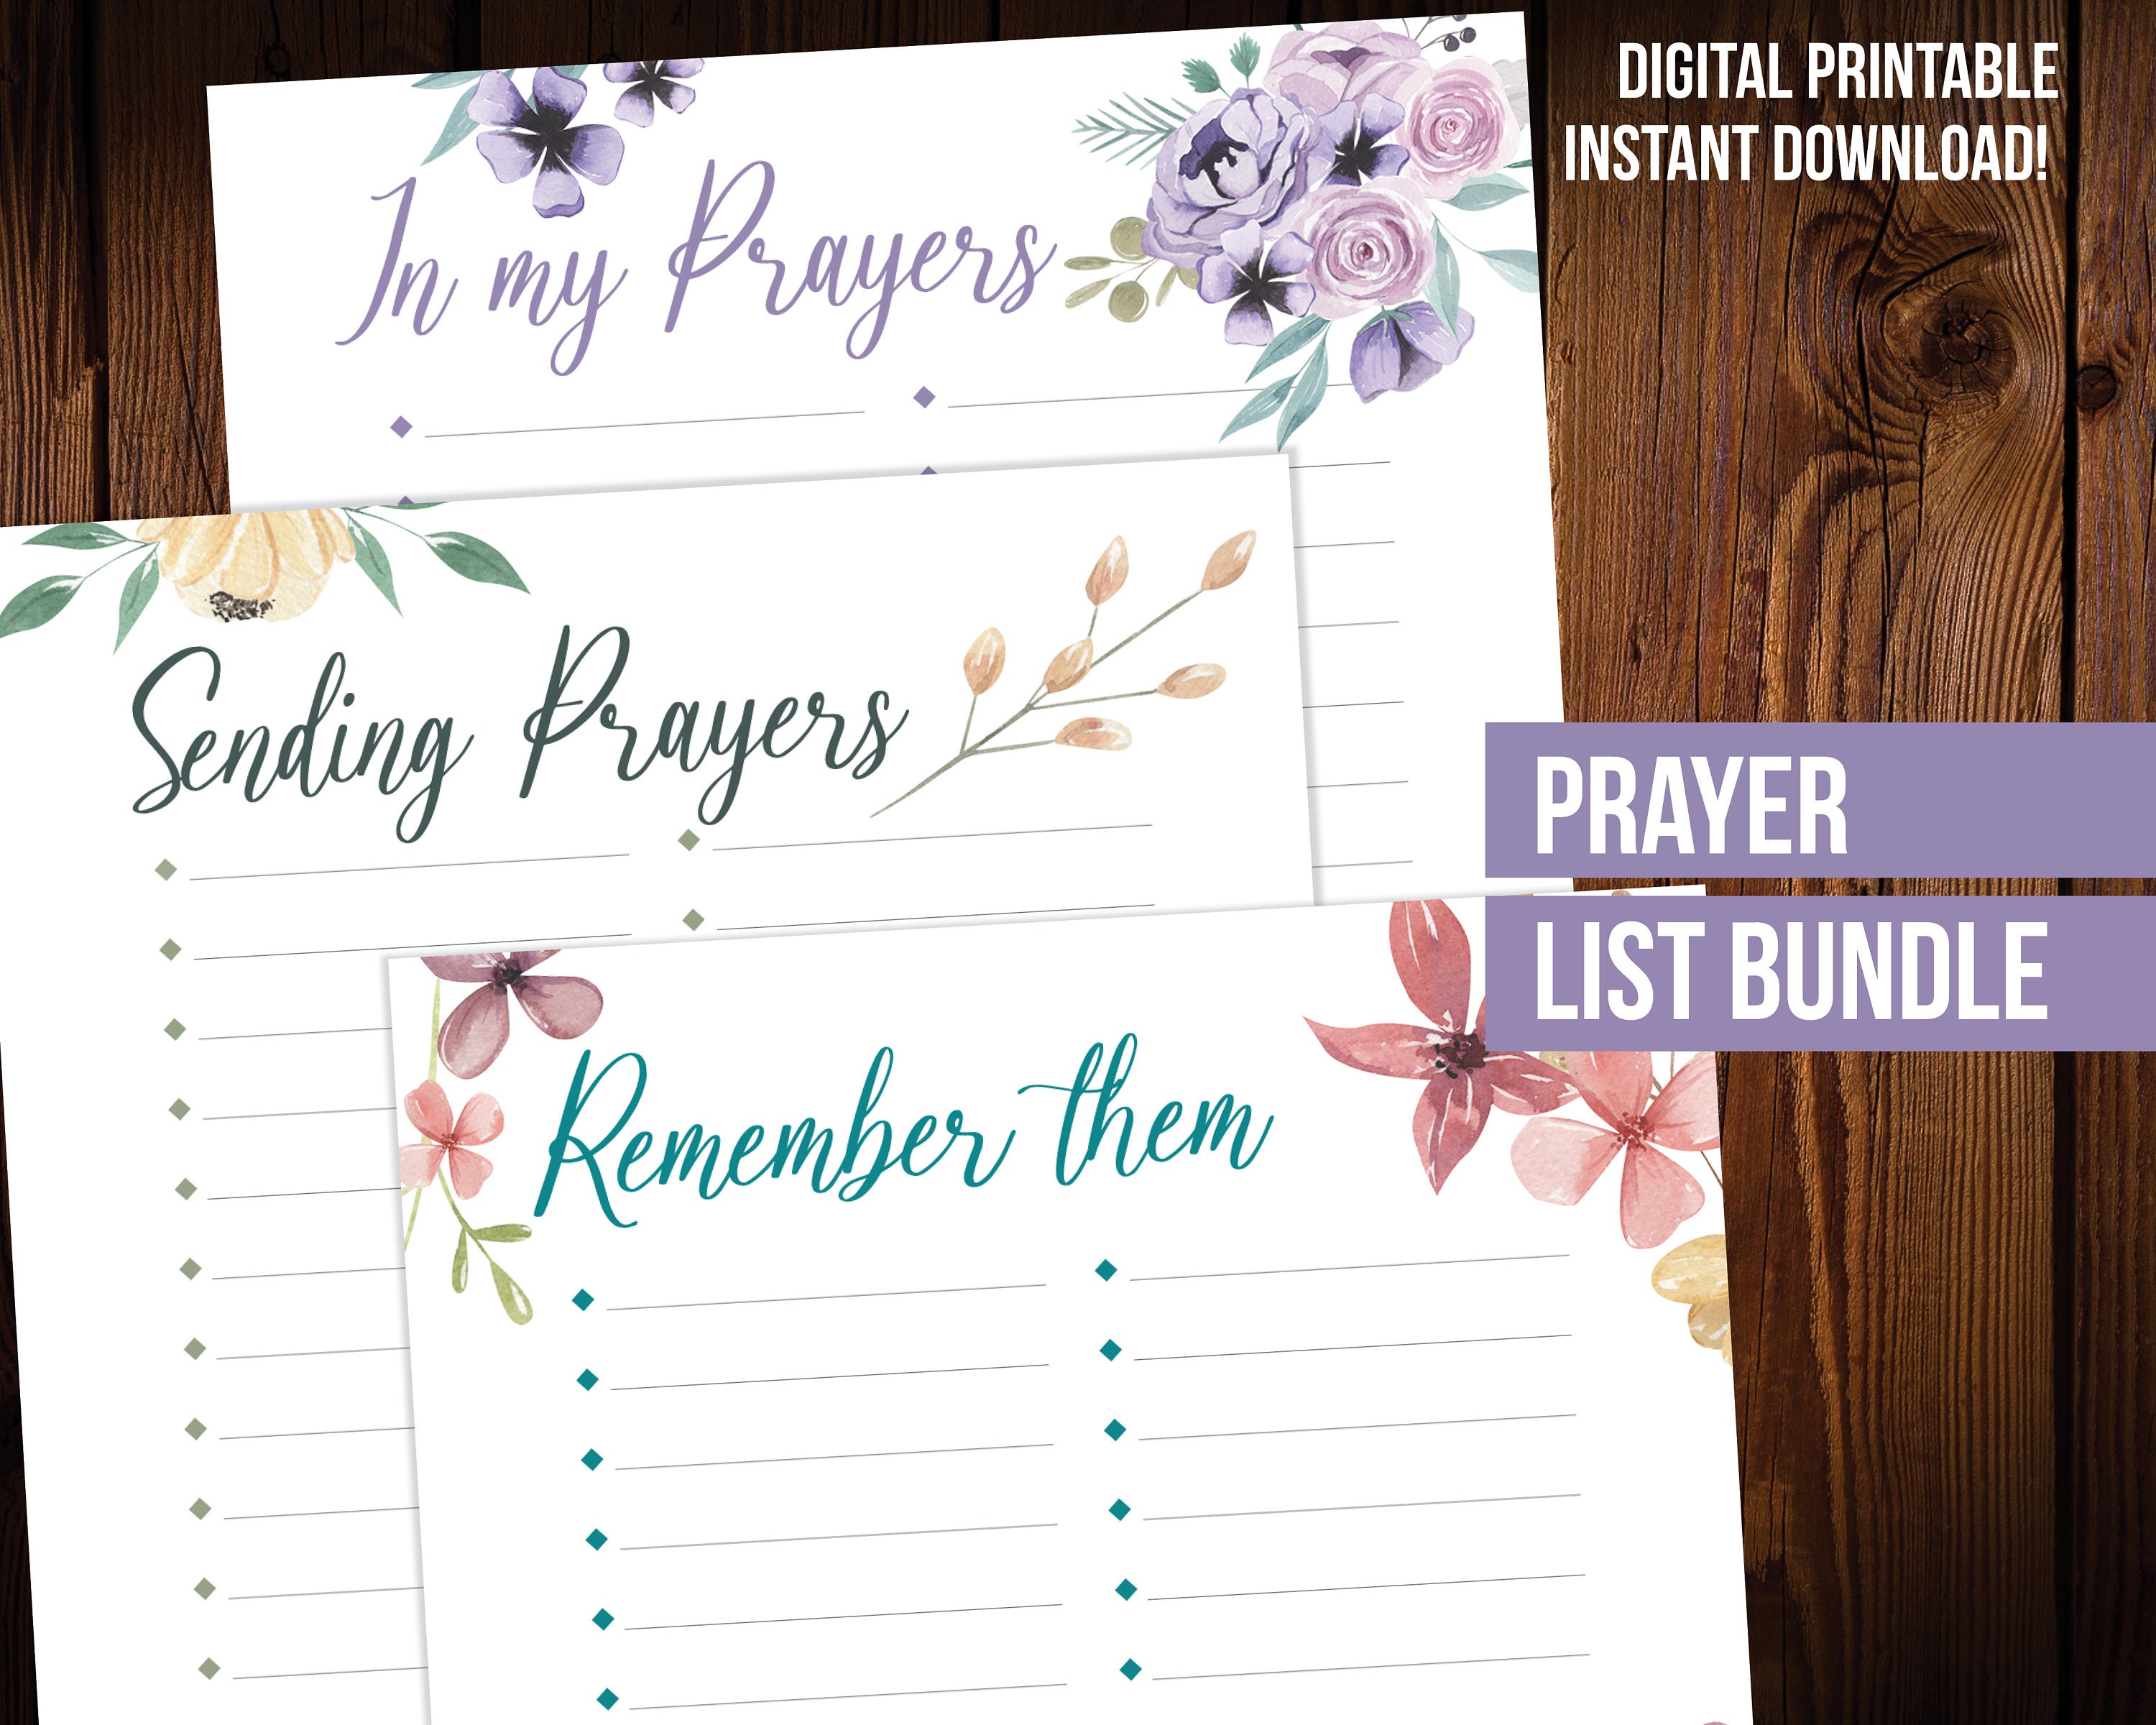 Prayer Journal Printables Prayer Journal for Women Watercolor Splash Floral  Design 